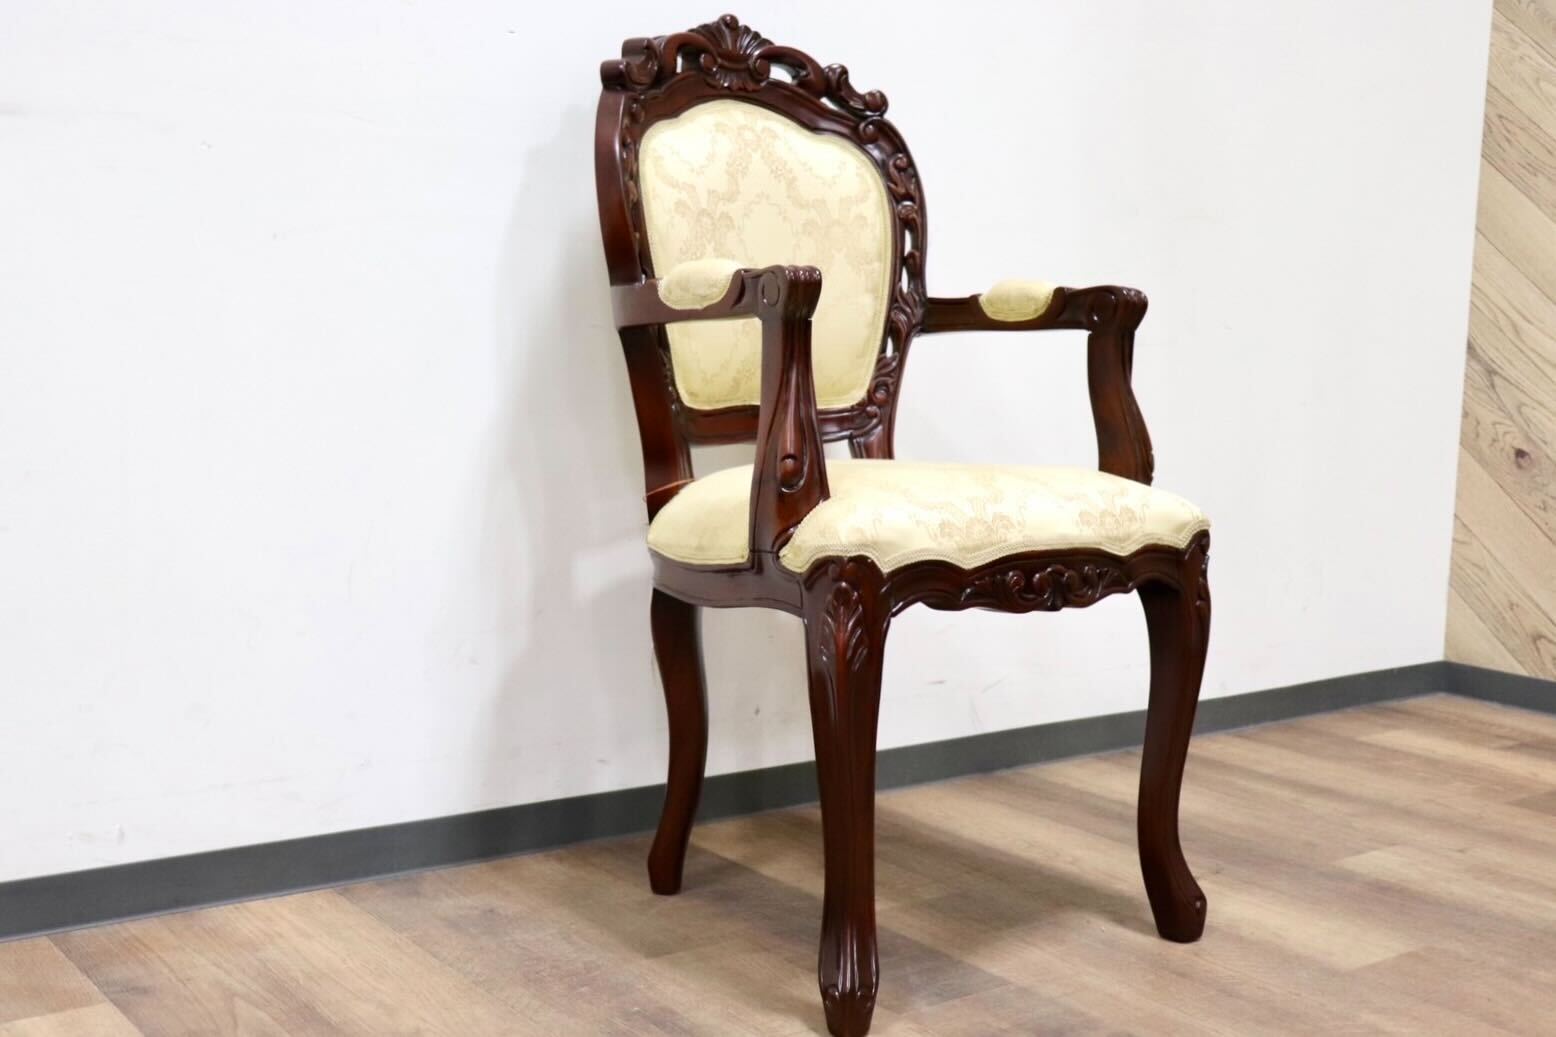 GMGS268C○クロシオ ダイニングチェア アームチェア 椅子 ファブリック マホガニー材 猫脚 彫刻 ヨーロピアン 輸入家具 定価5.8万 展示品